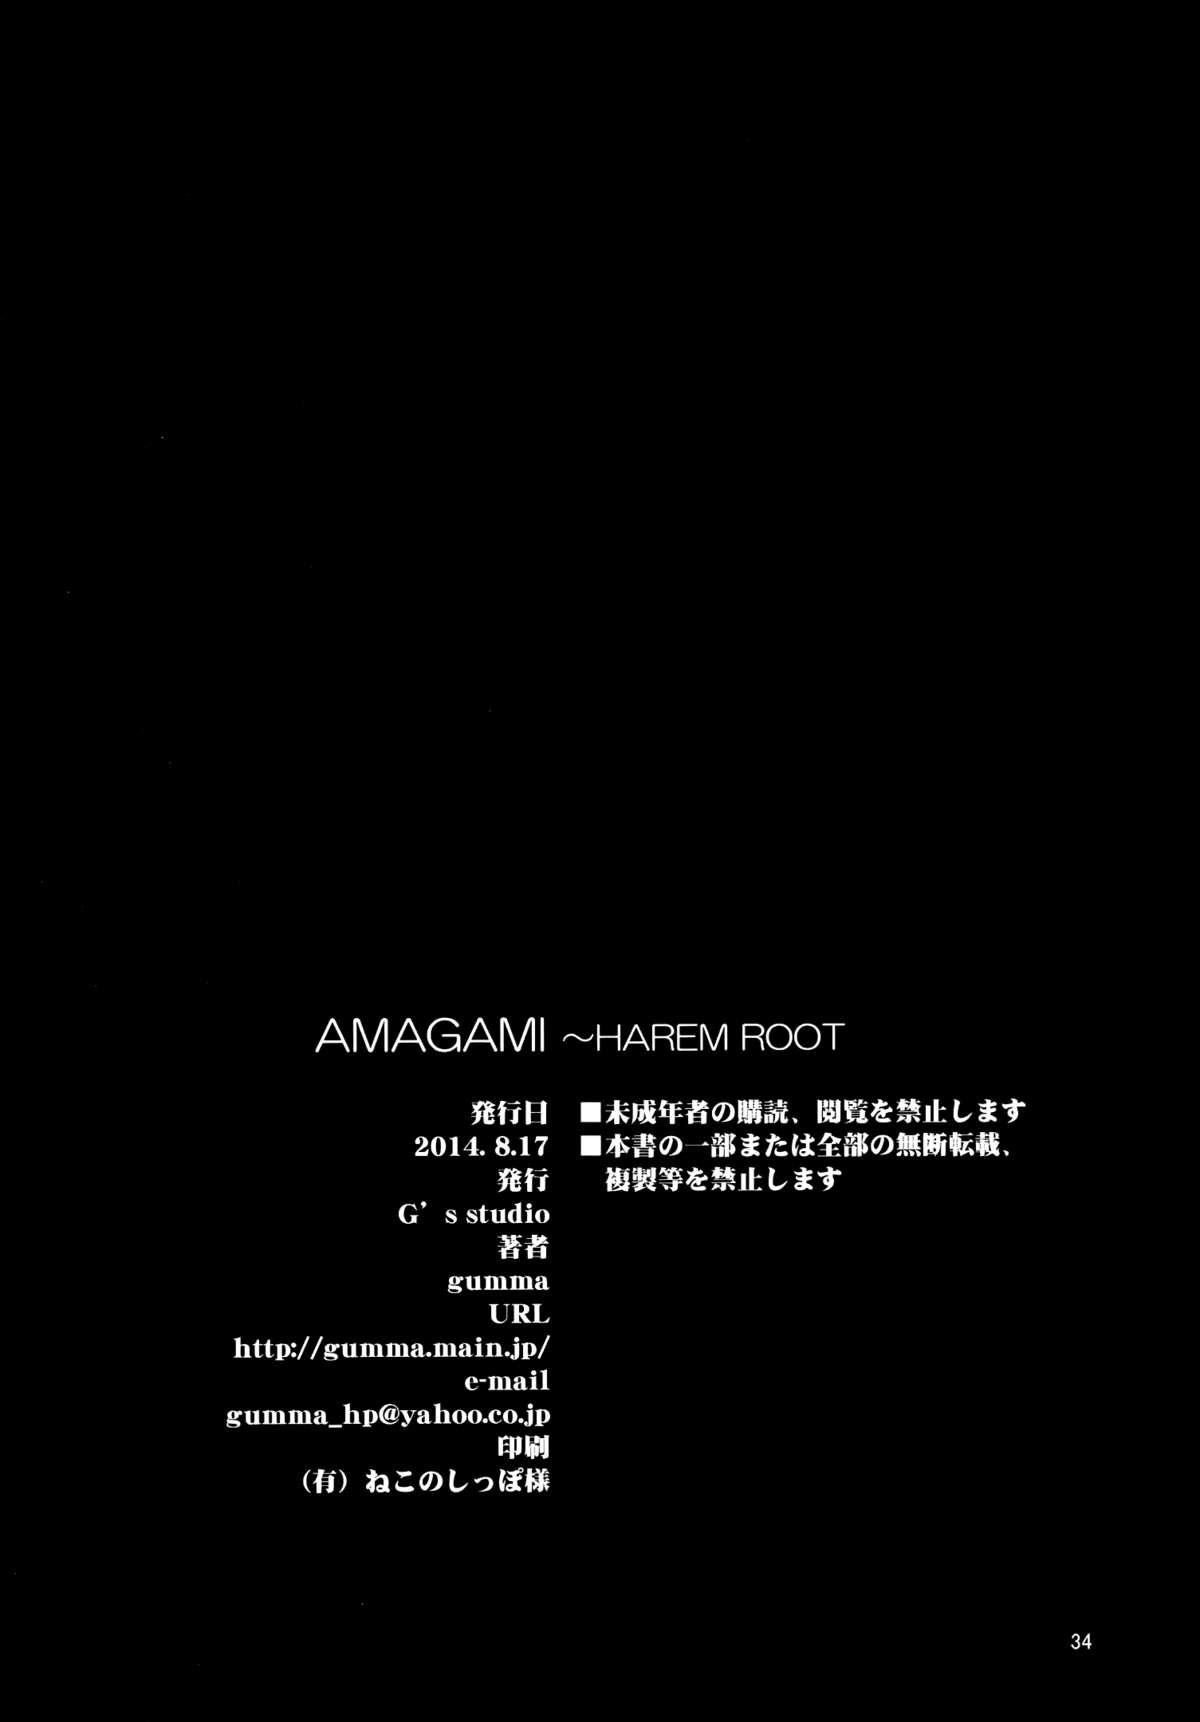 Grande AMAGAMI ~HAREM ROOT - Amagami Gay Massage - Page 34